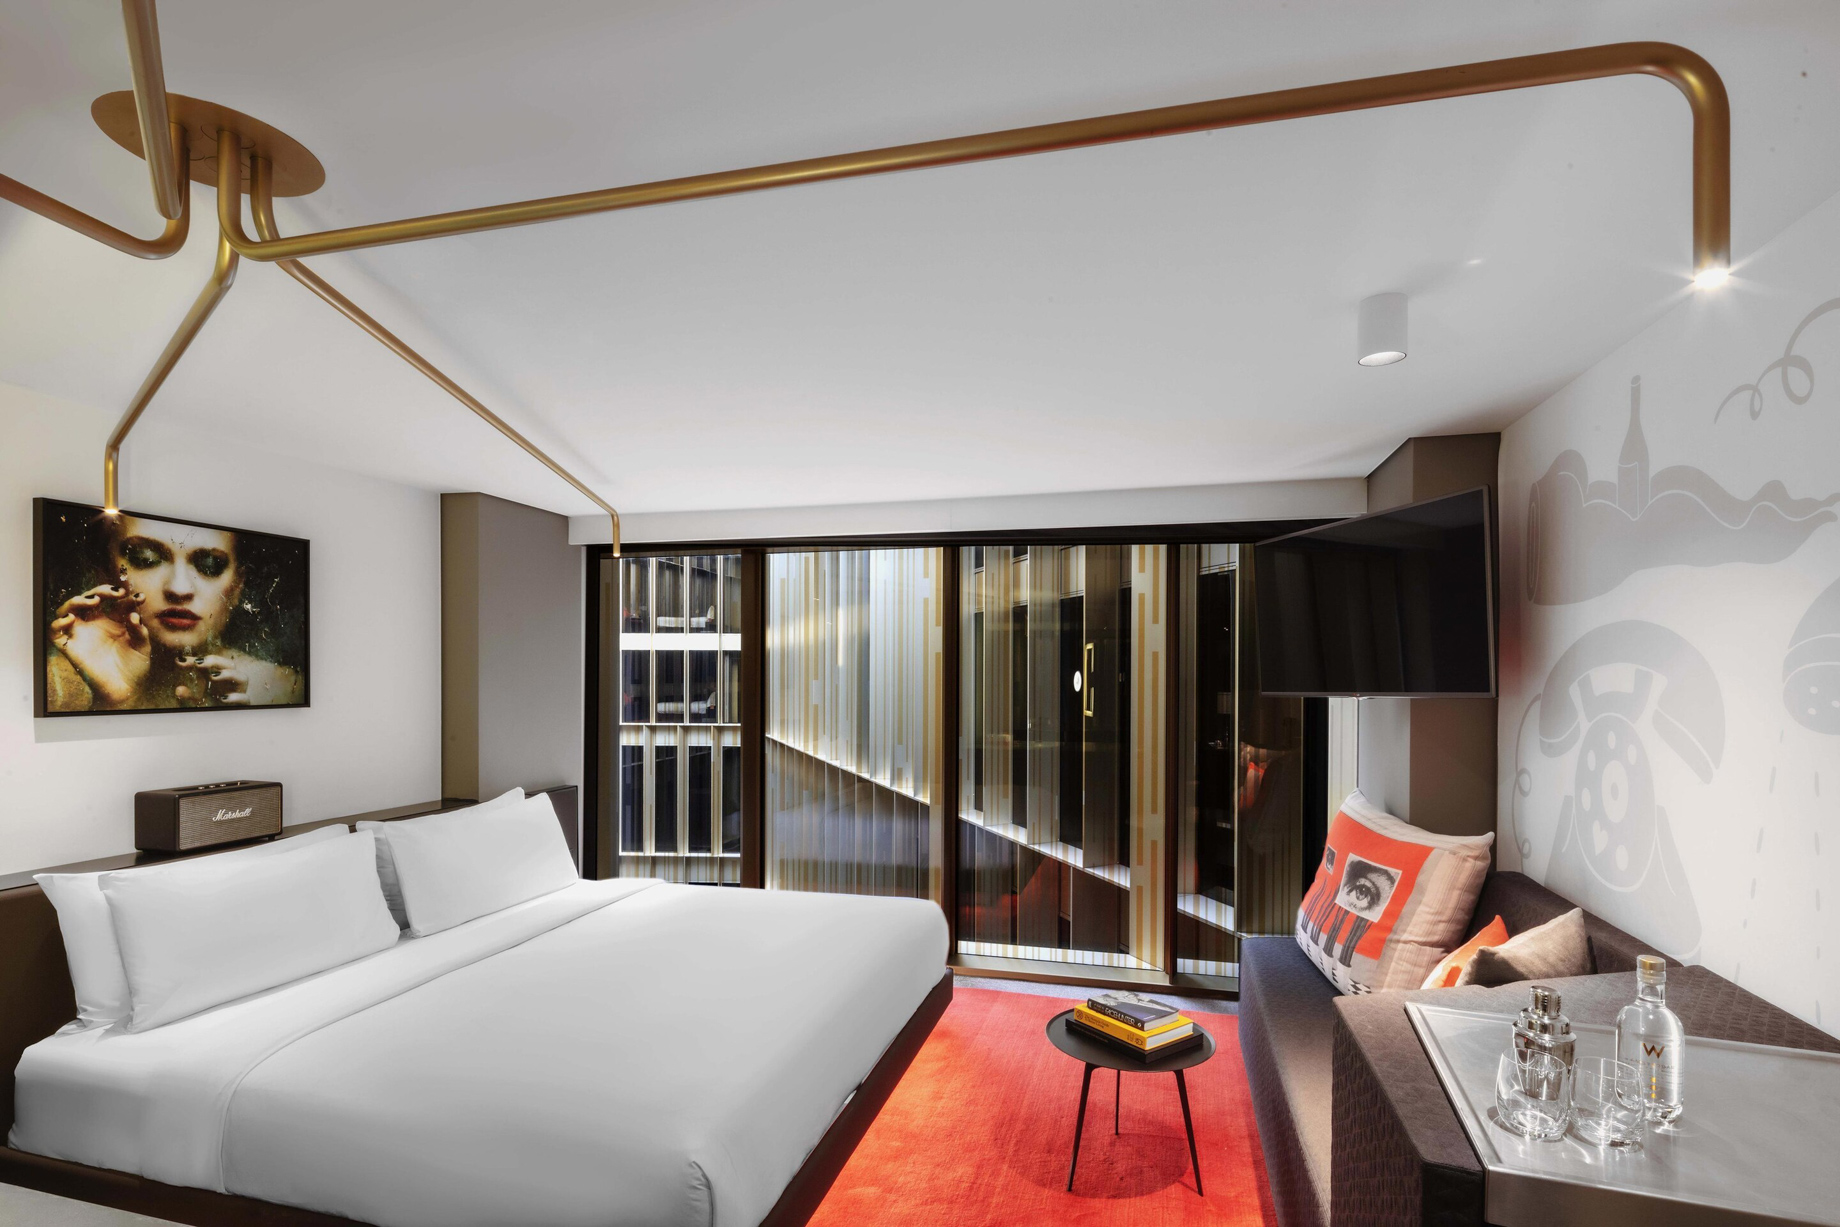 W Amsterdam Hotel – Amsterdam, Netherlands – Cozy Exchange Guest Room Decor